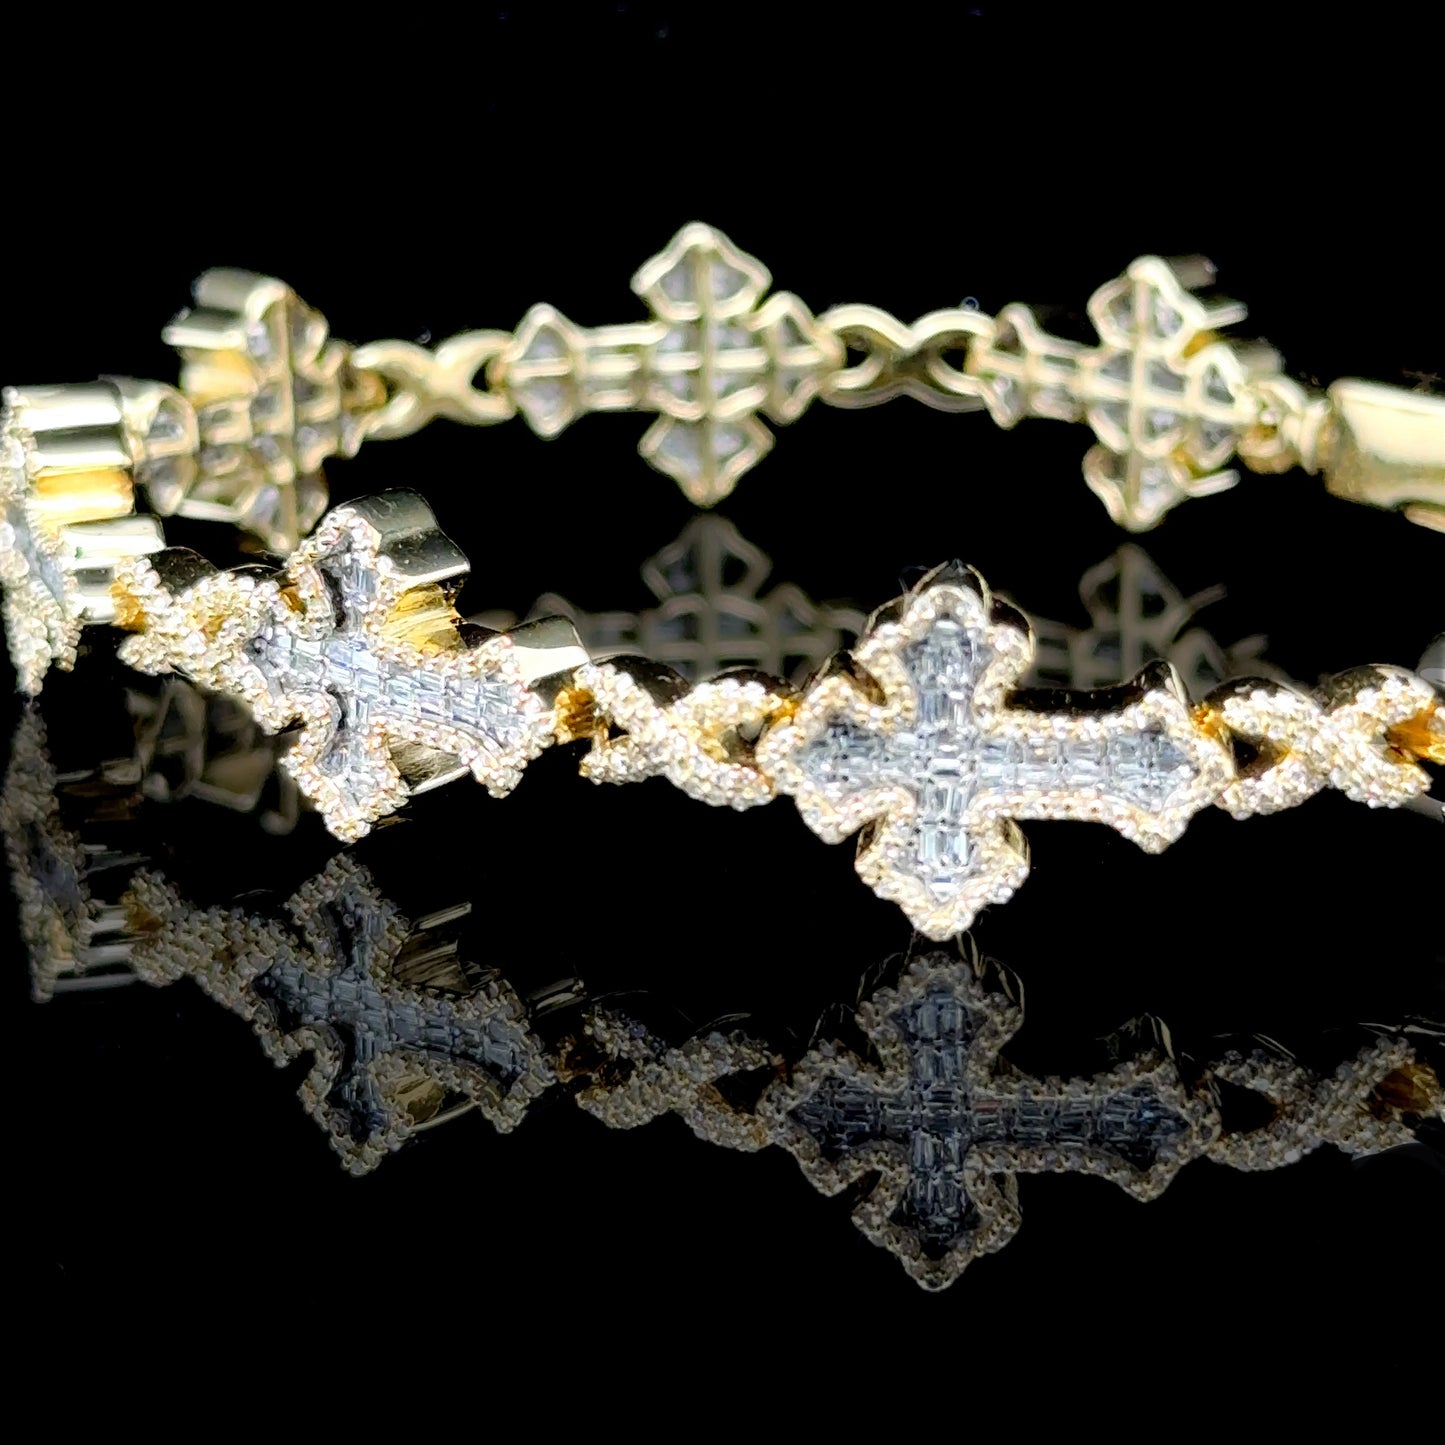 10K yellow gold bracelet featuring diamonds in a cross design